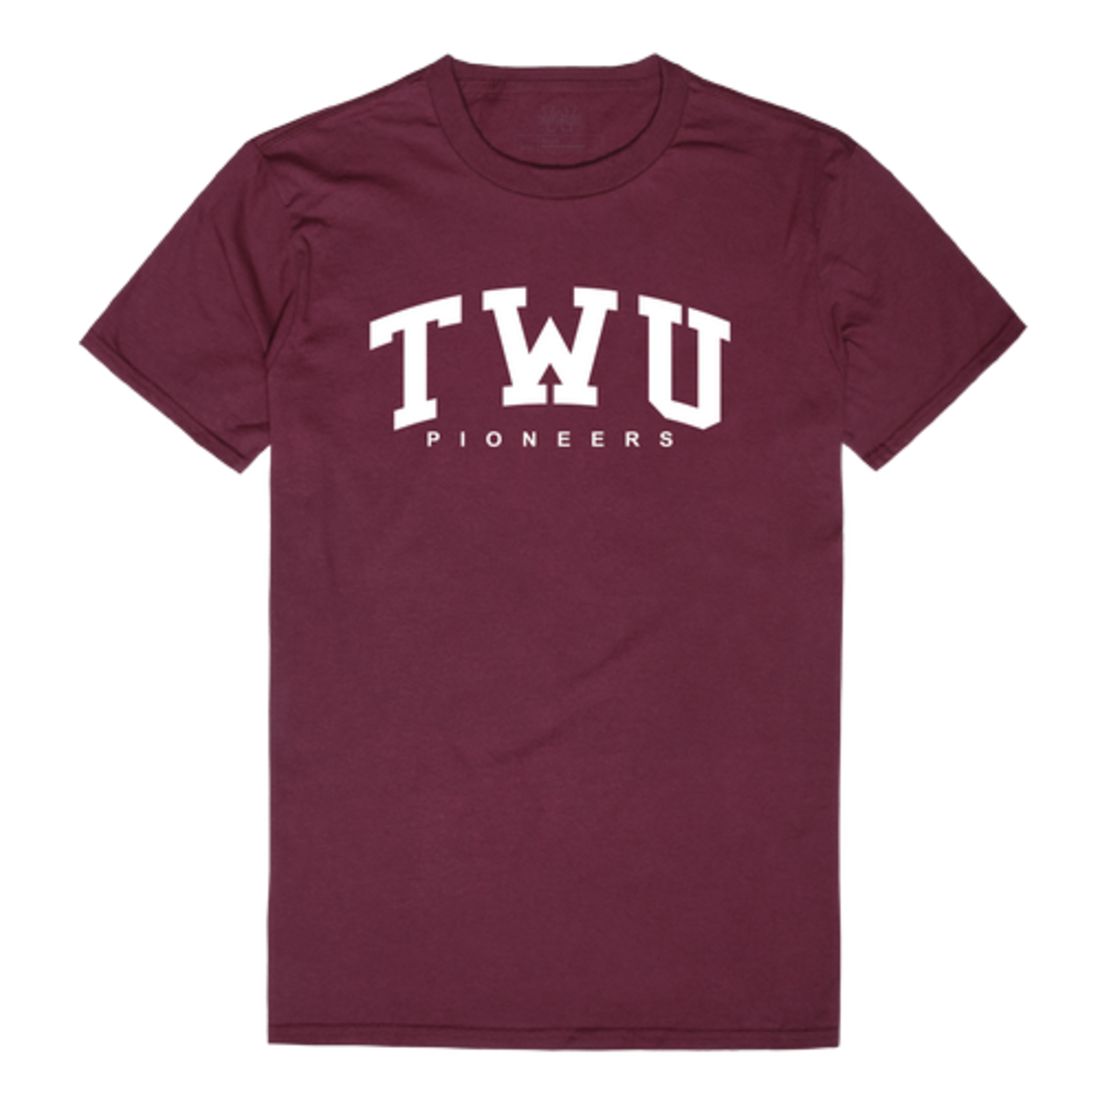 Texas Woman's University Pioneers Collegiate T-Shirt Tee